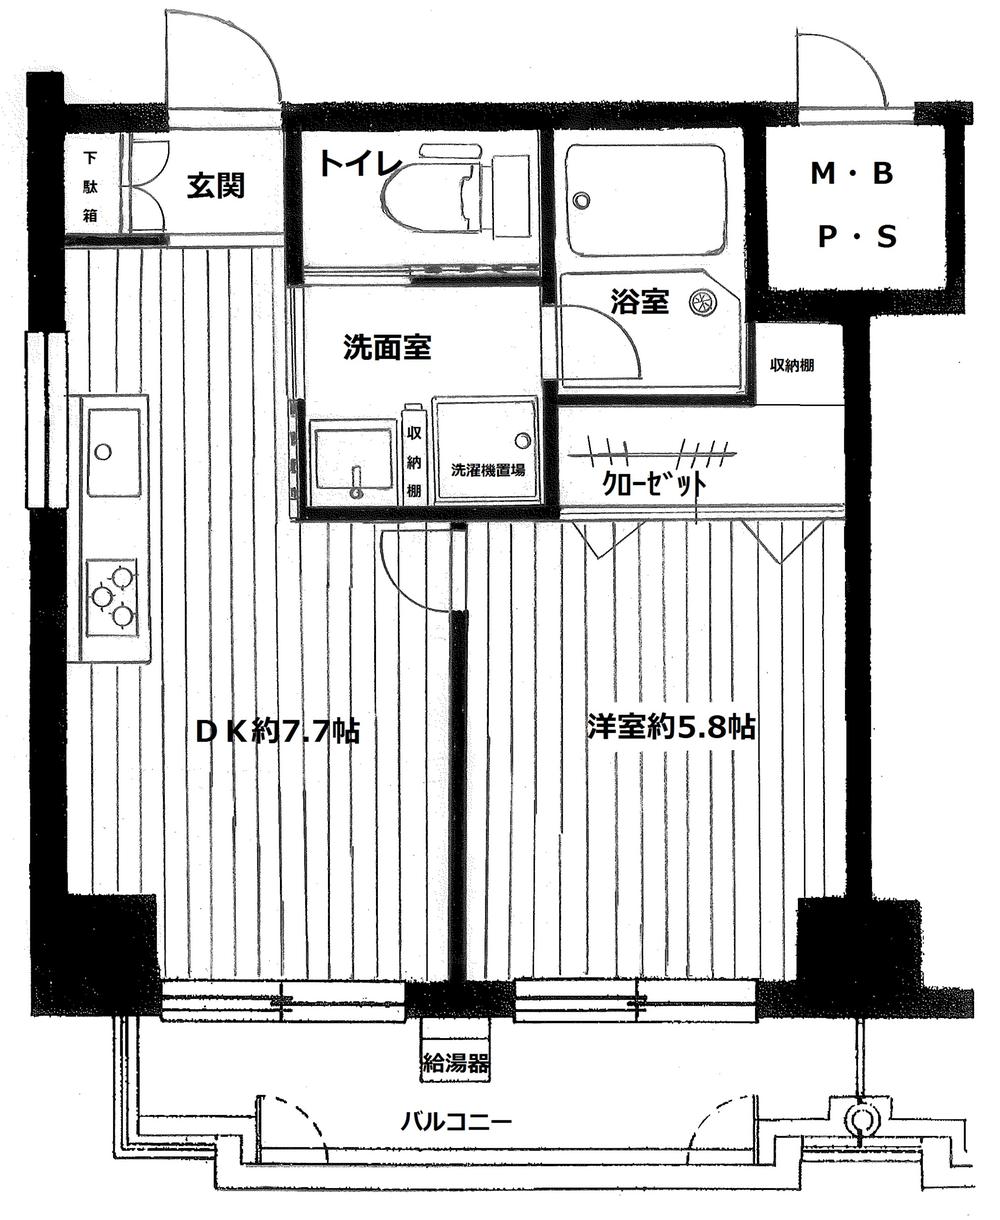 Floor plan. 1DK, Price 21,800,000 yen, Footprint 32.4 sq m , Balcony area 5.82 sq m